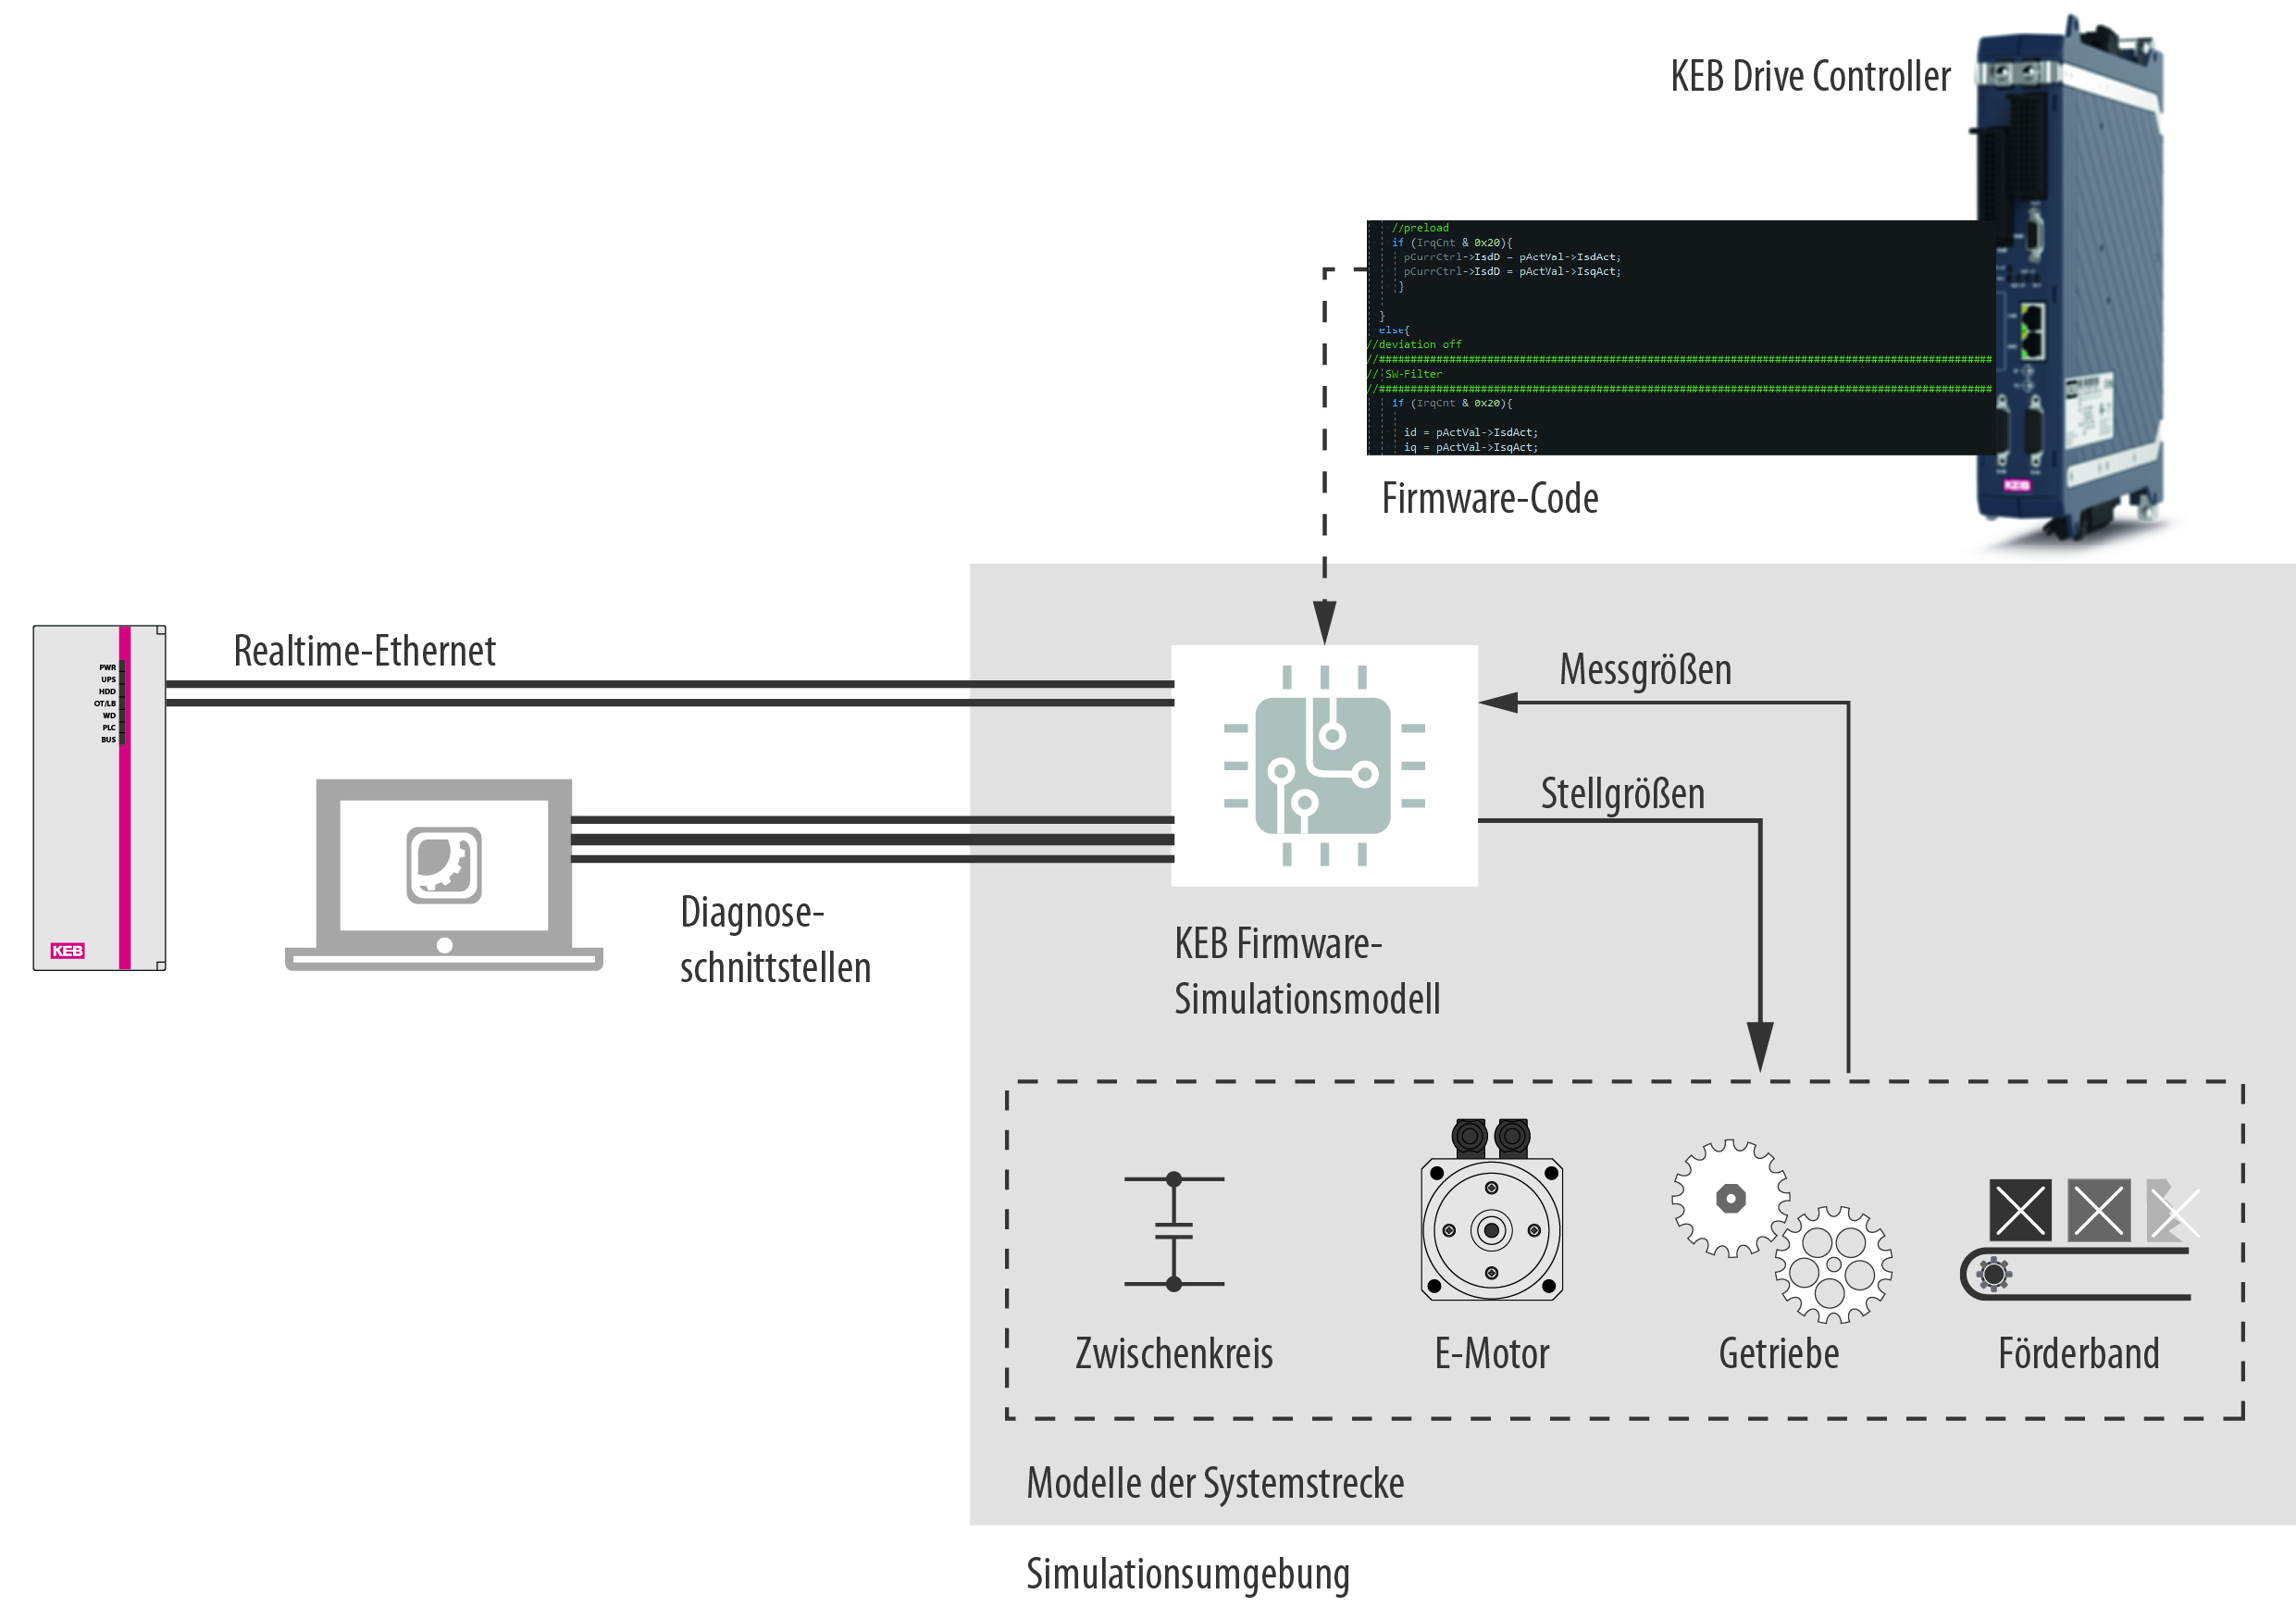 KEB Firmware-Simulationsmodell in einer Simulationsumgebung inklusive der Anbindung an eine KEB PLC und das Softwaretool COMBIVIS studio 6 mit Parametrierumgebung (Bild: KEB Automation KG)